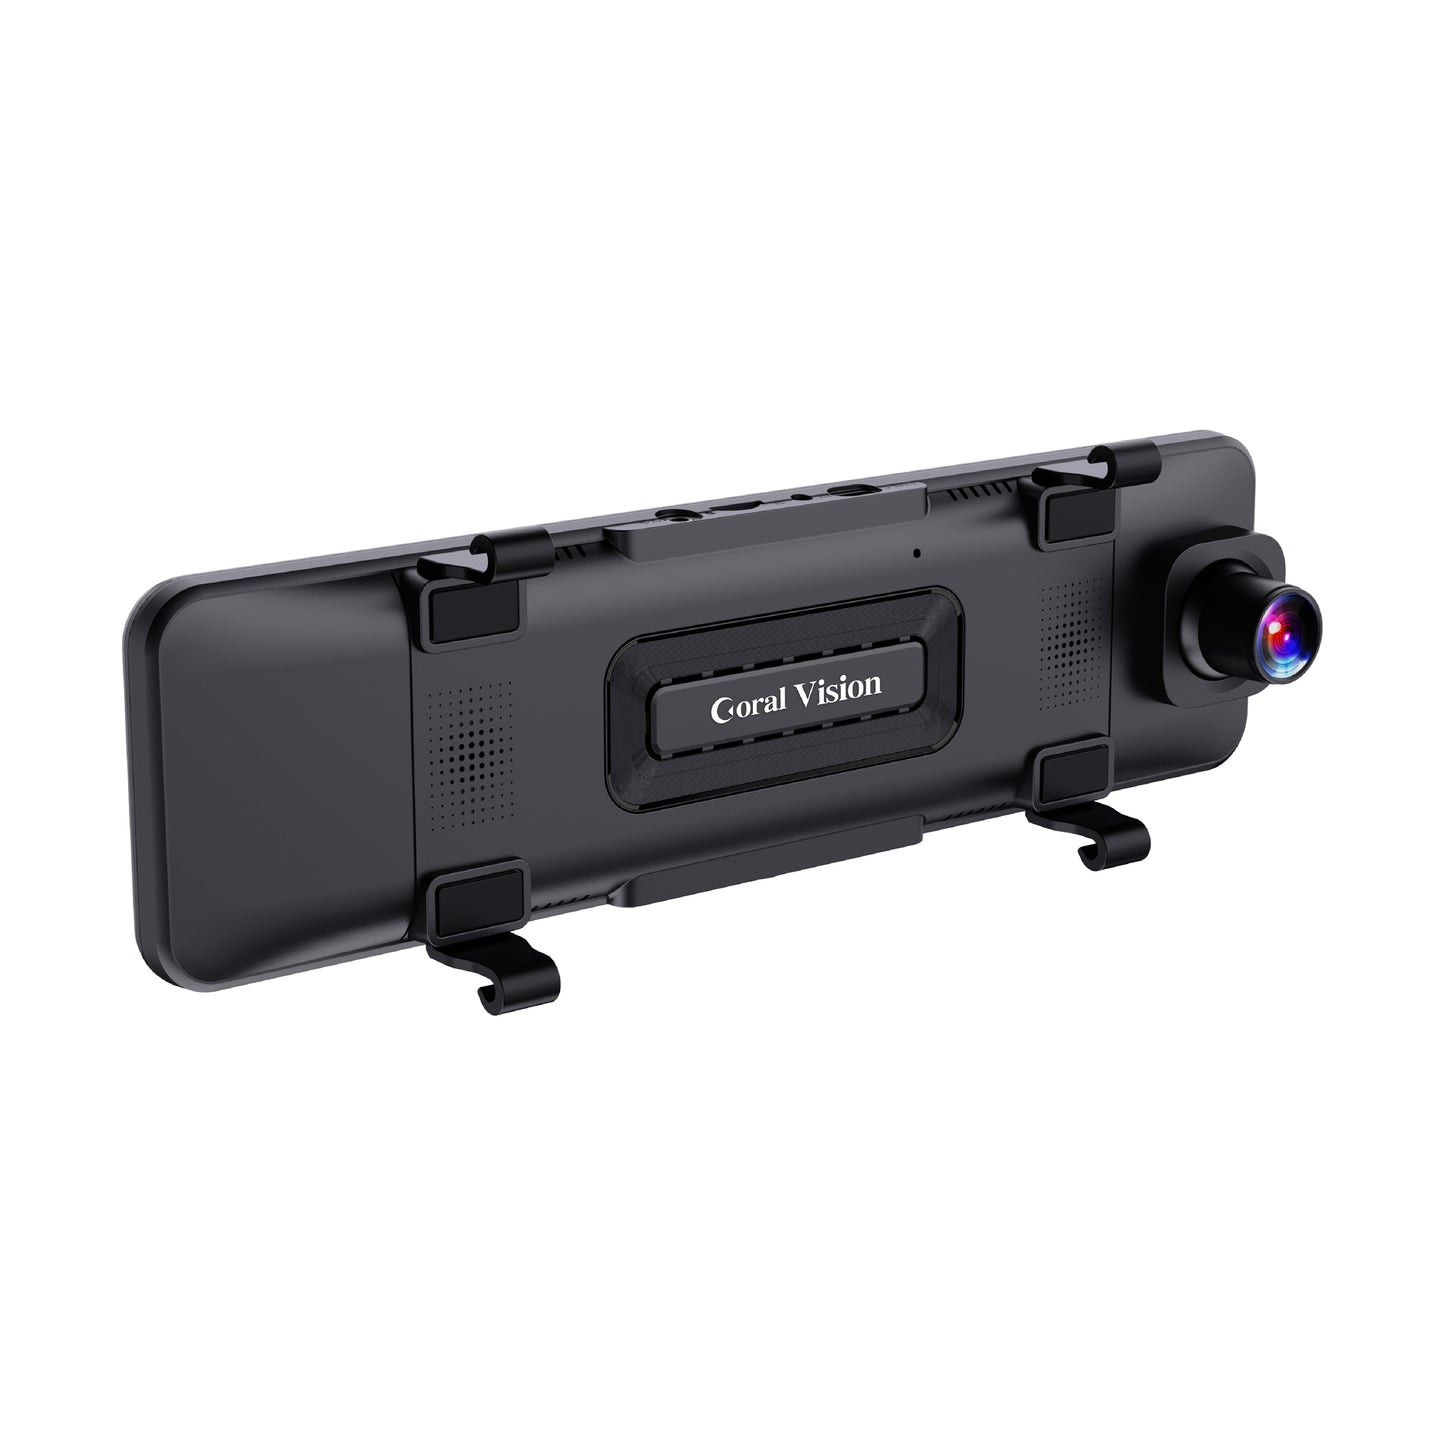 R9 Mirror Dashcam - Dual-lens 4K Dashcam wireless CarPlay – Coral